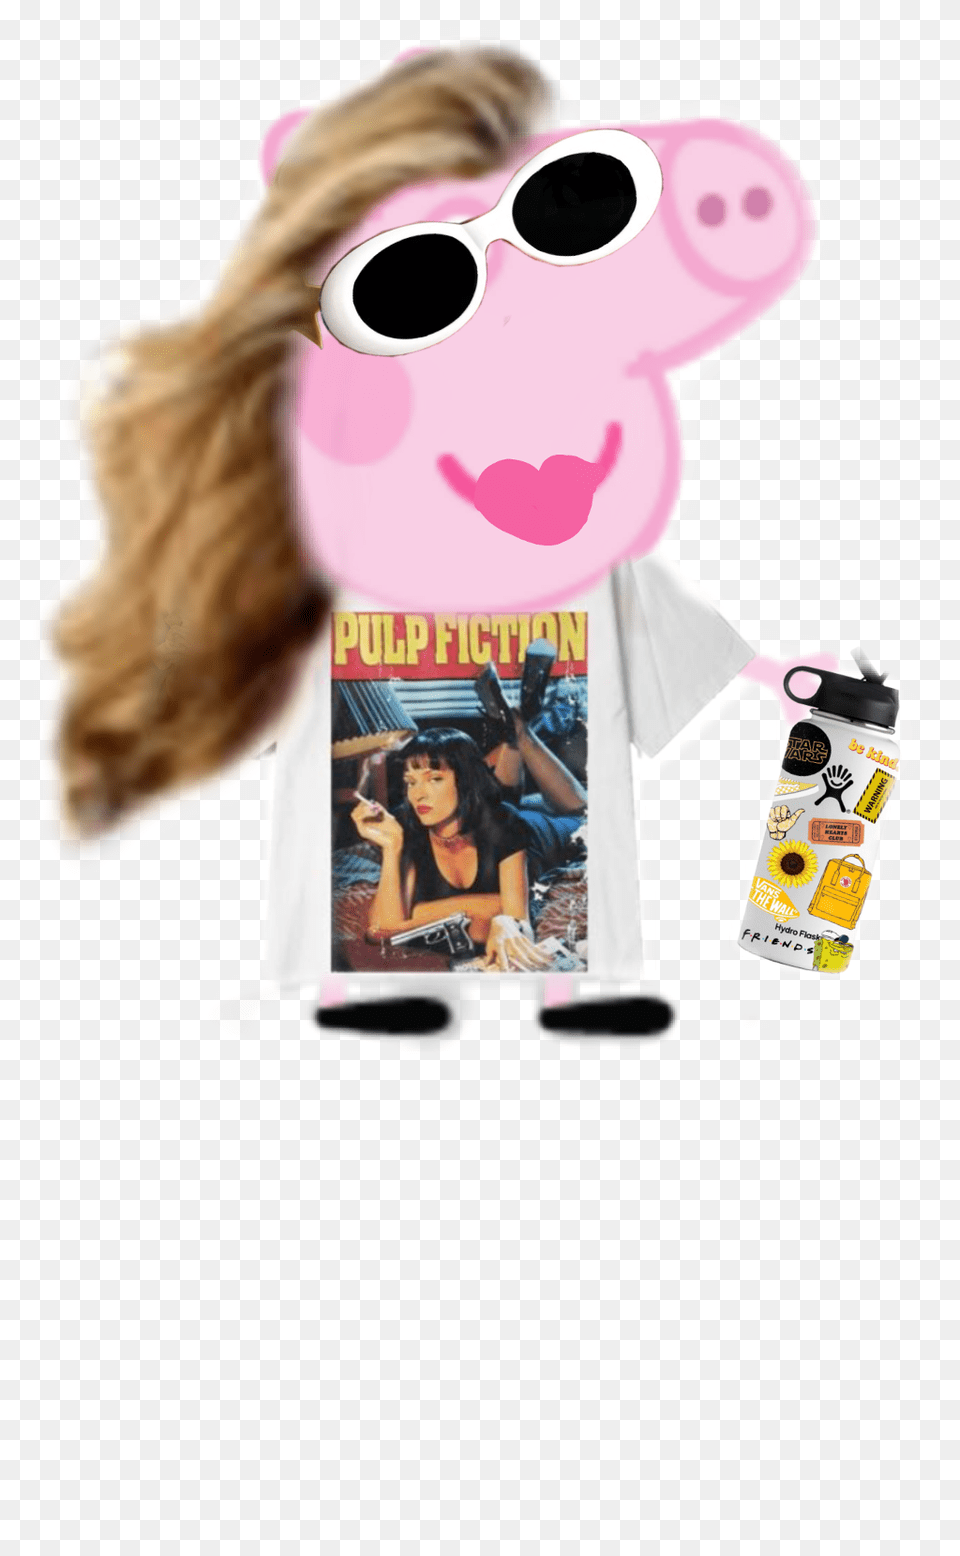 Peppapig Peppa Pig Vscopig Vscogirl Peppapigmeme, Accessories, Sunglasses, Advertisement, Poster Png